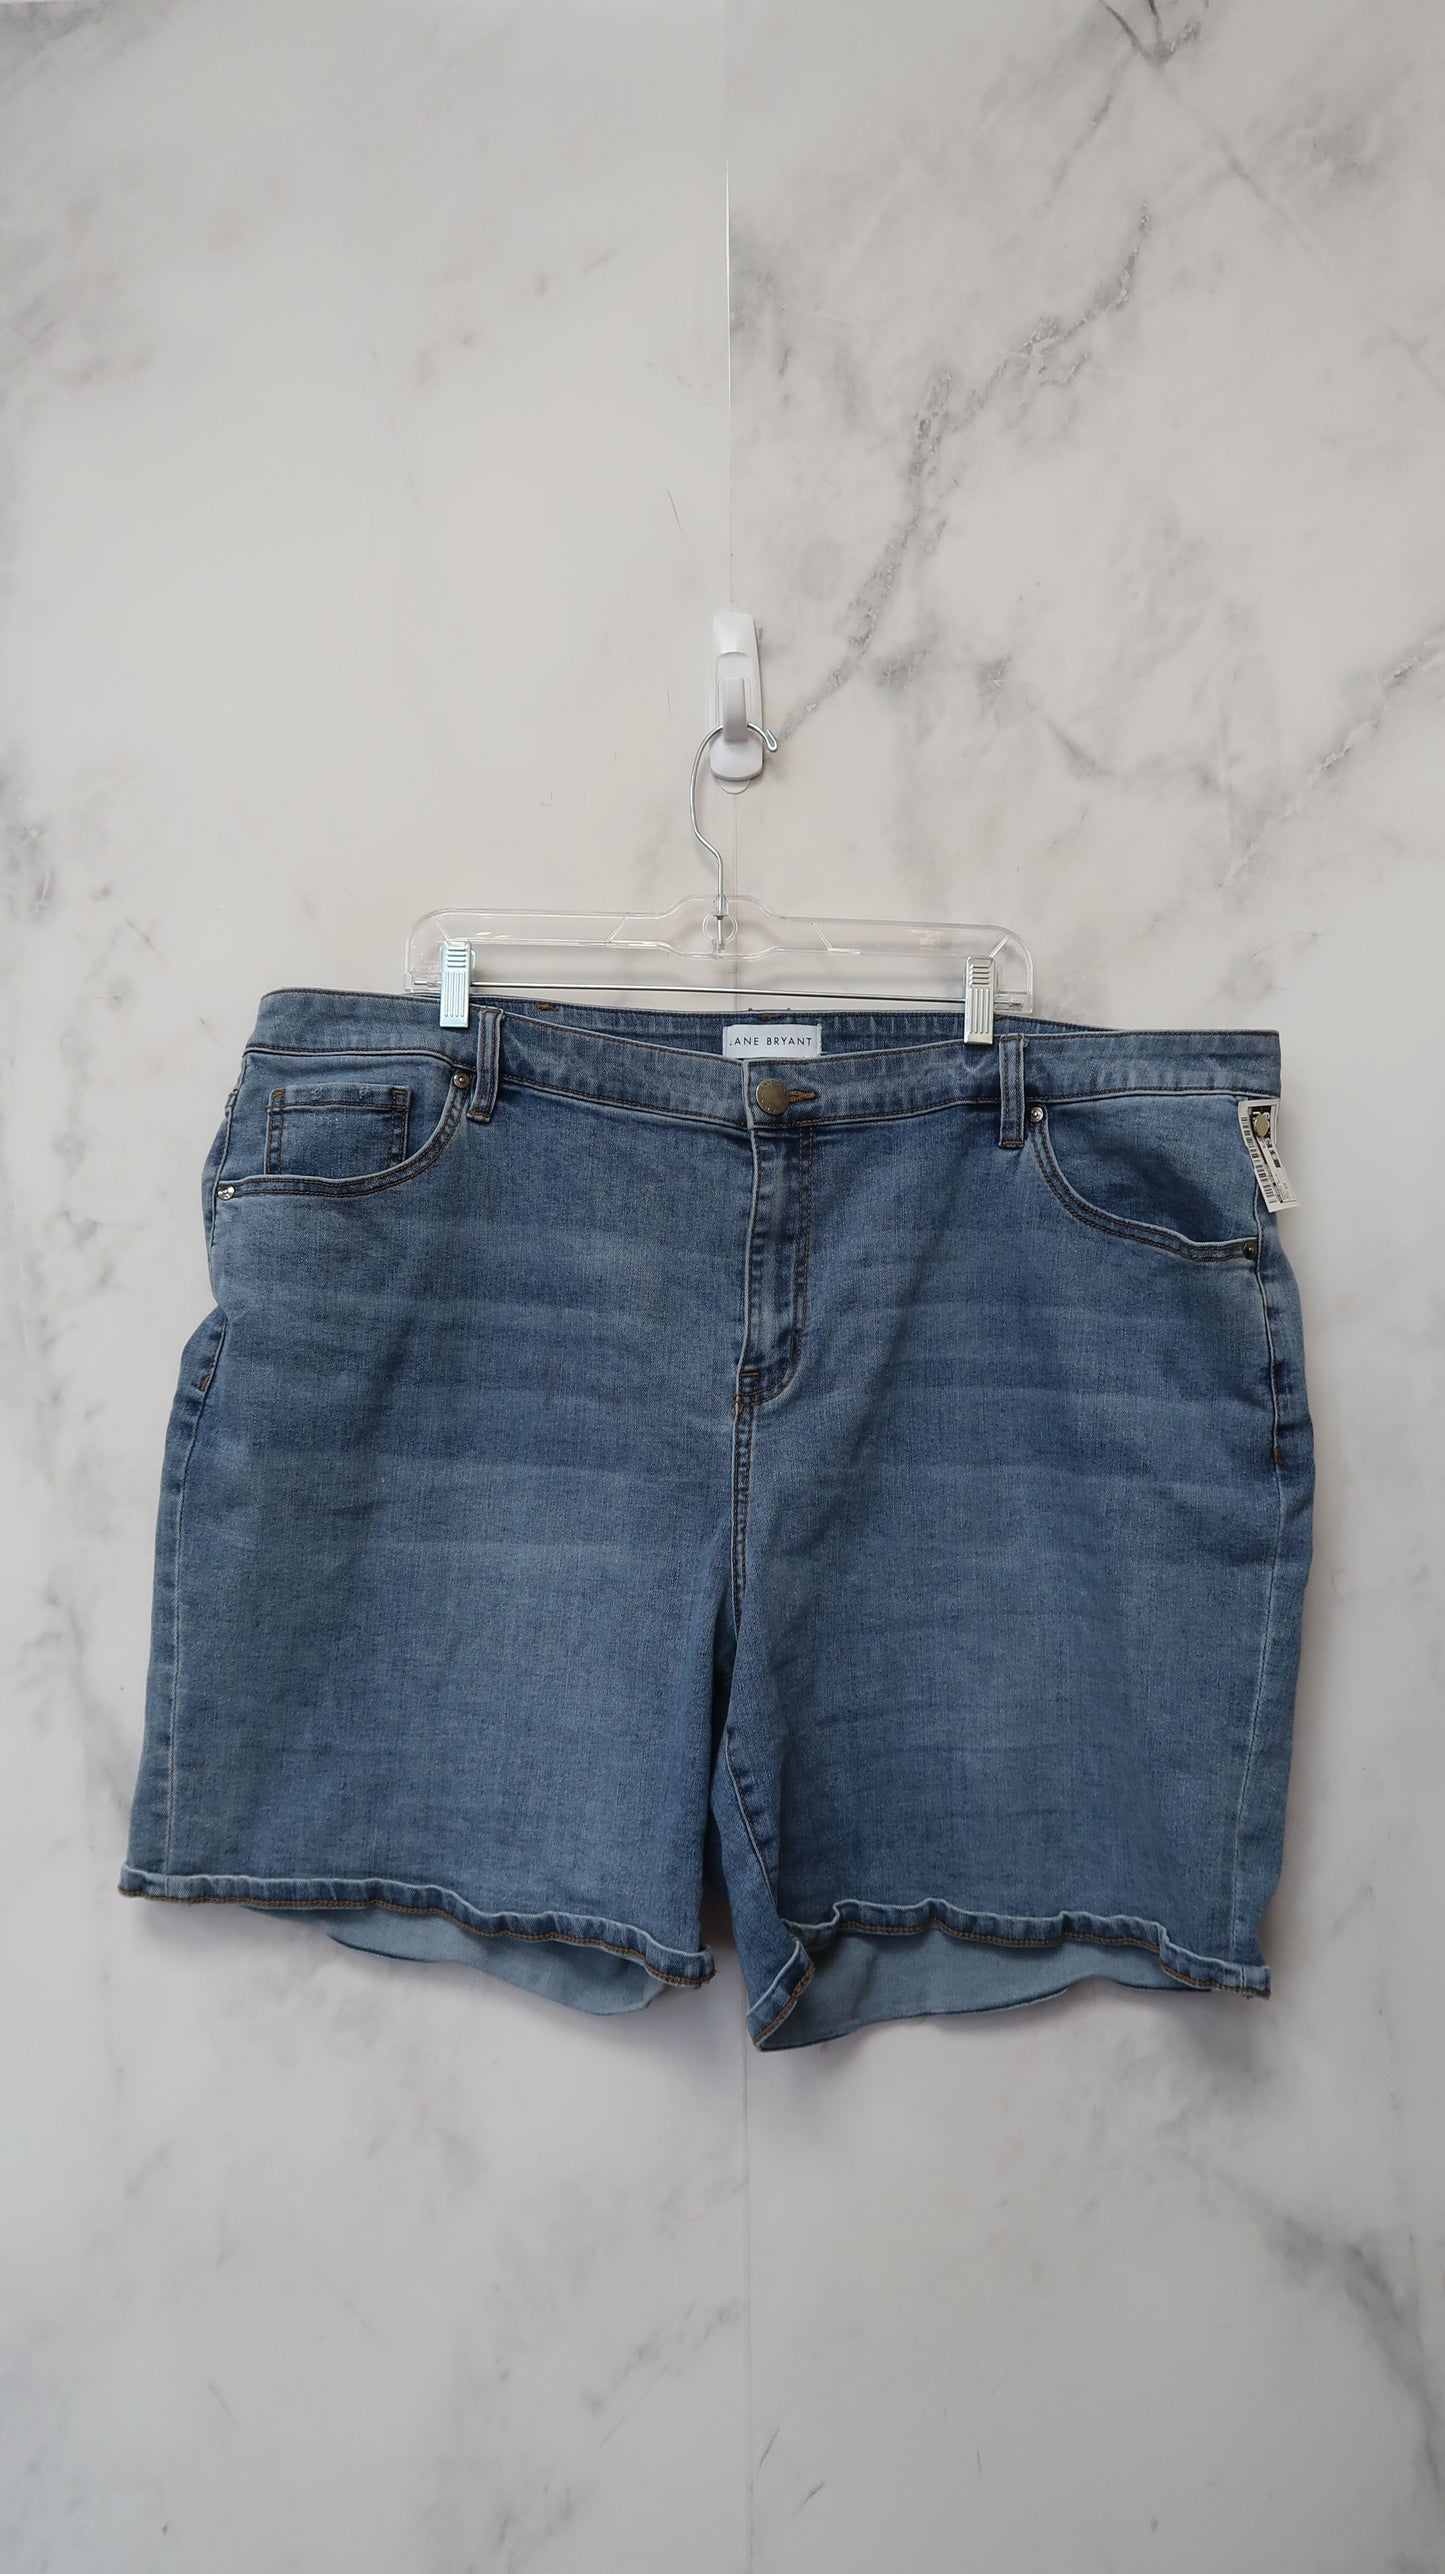 Shorts By Lane Bryant  Size: 22